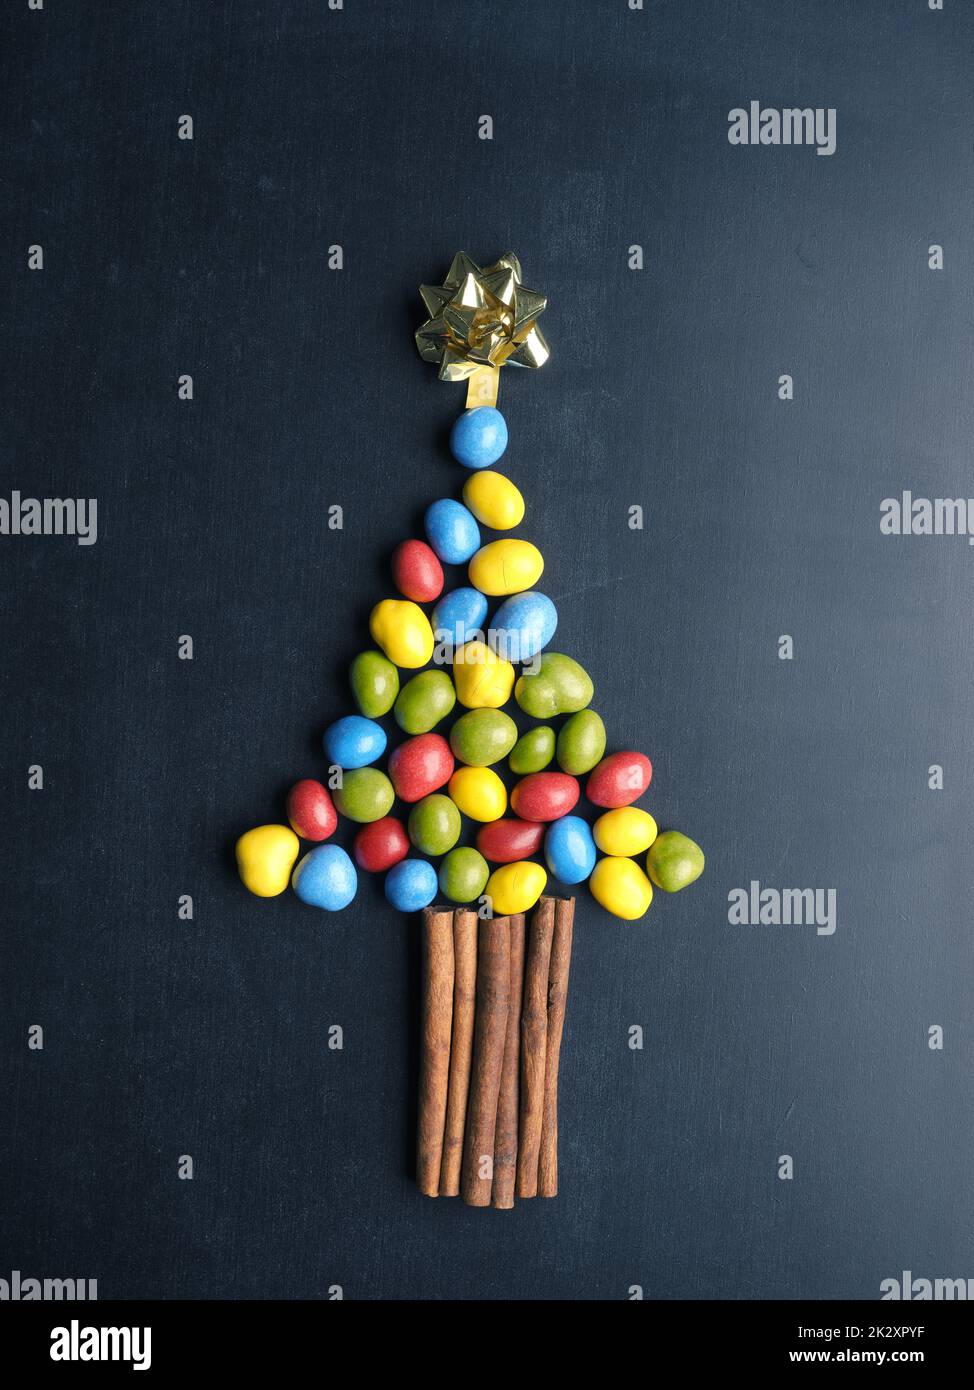 Chocolate peanuts as Christmas tree shape on a blackboard Stock Photo